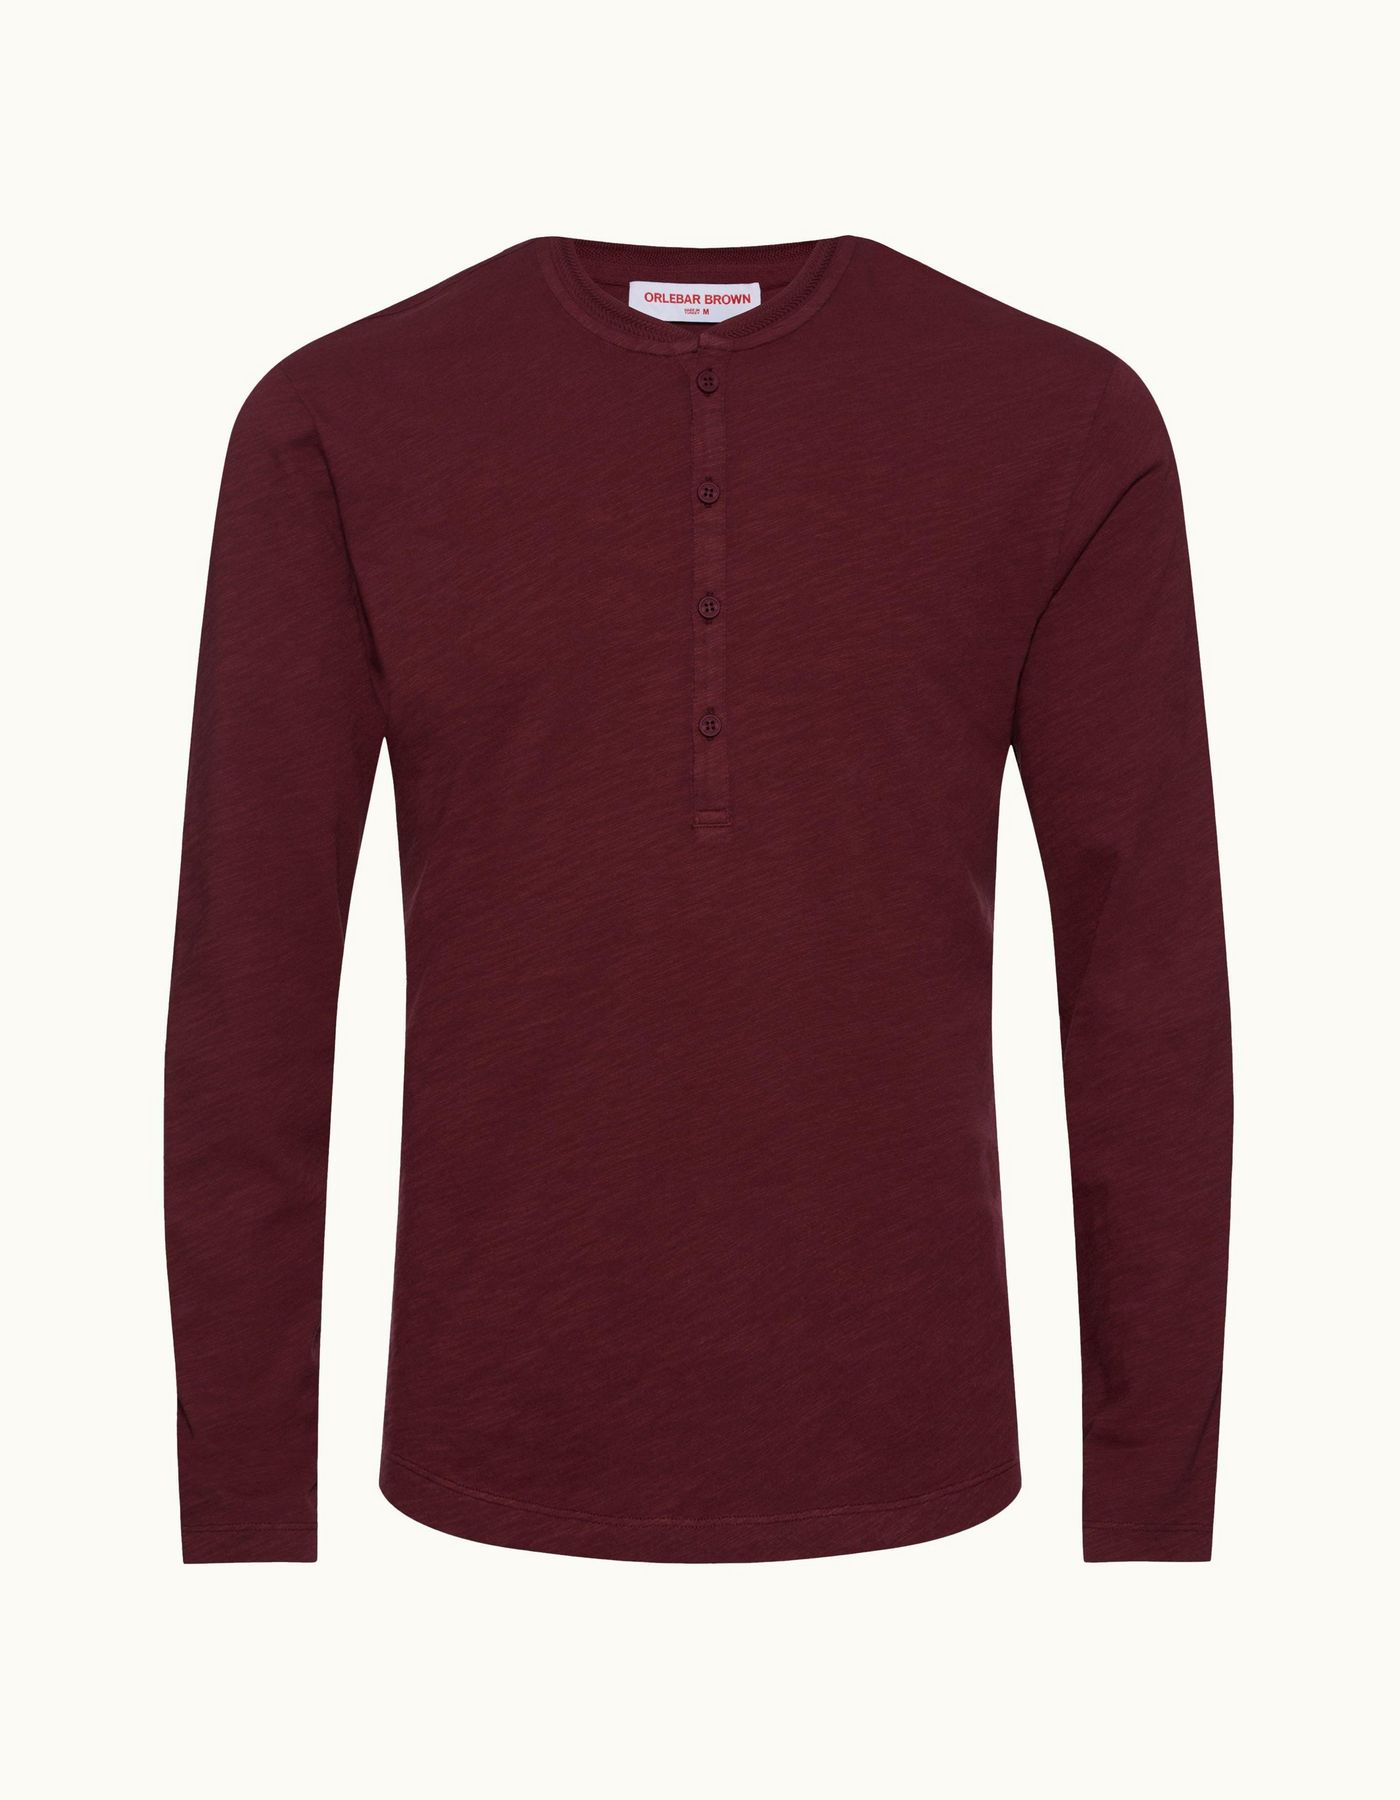 Harrison - Mens Port Classic Fit Garment Dye Long-Sleeve T-shirt